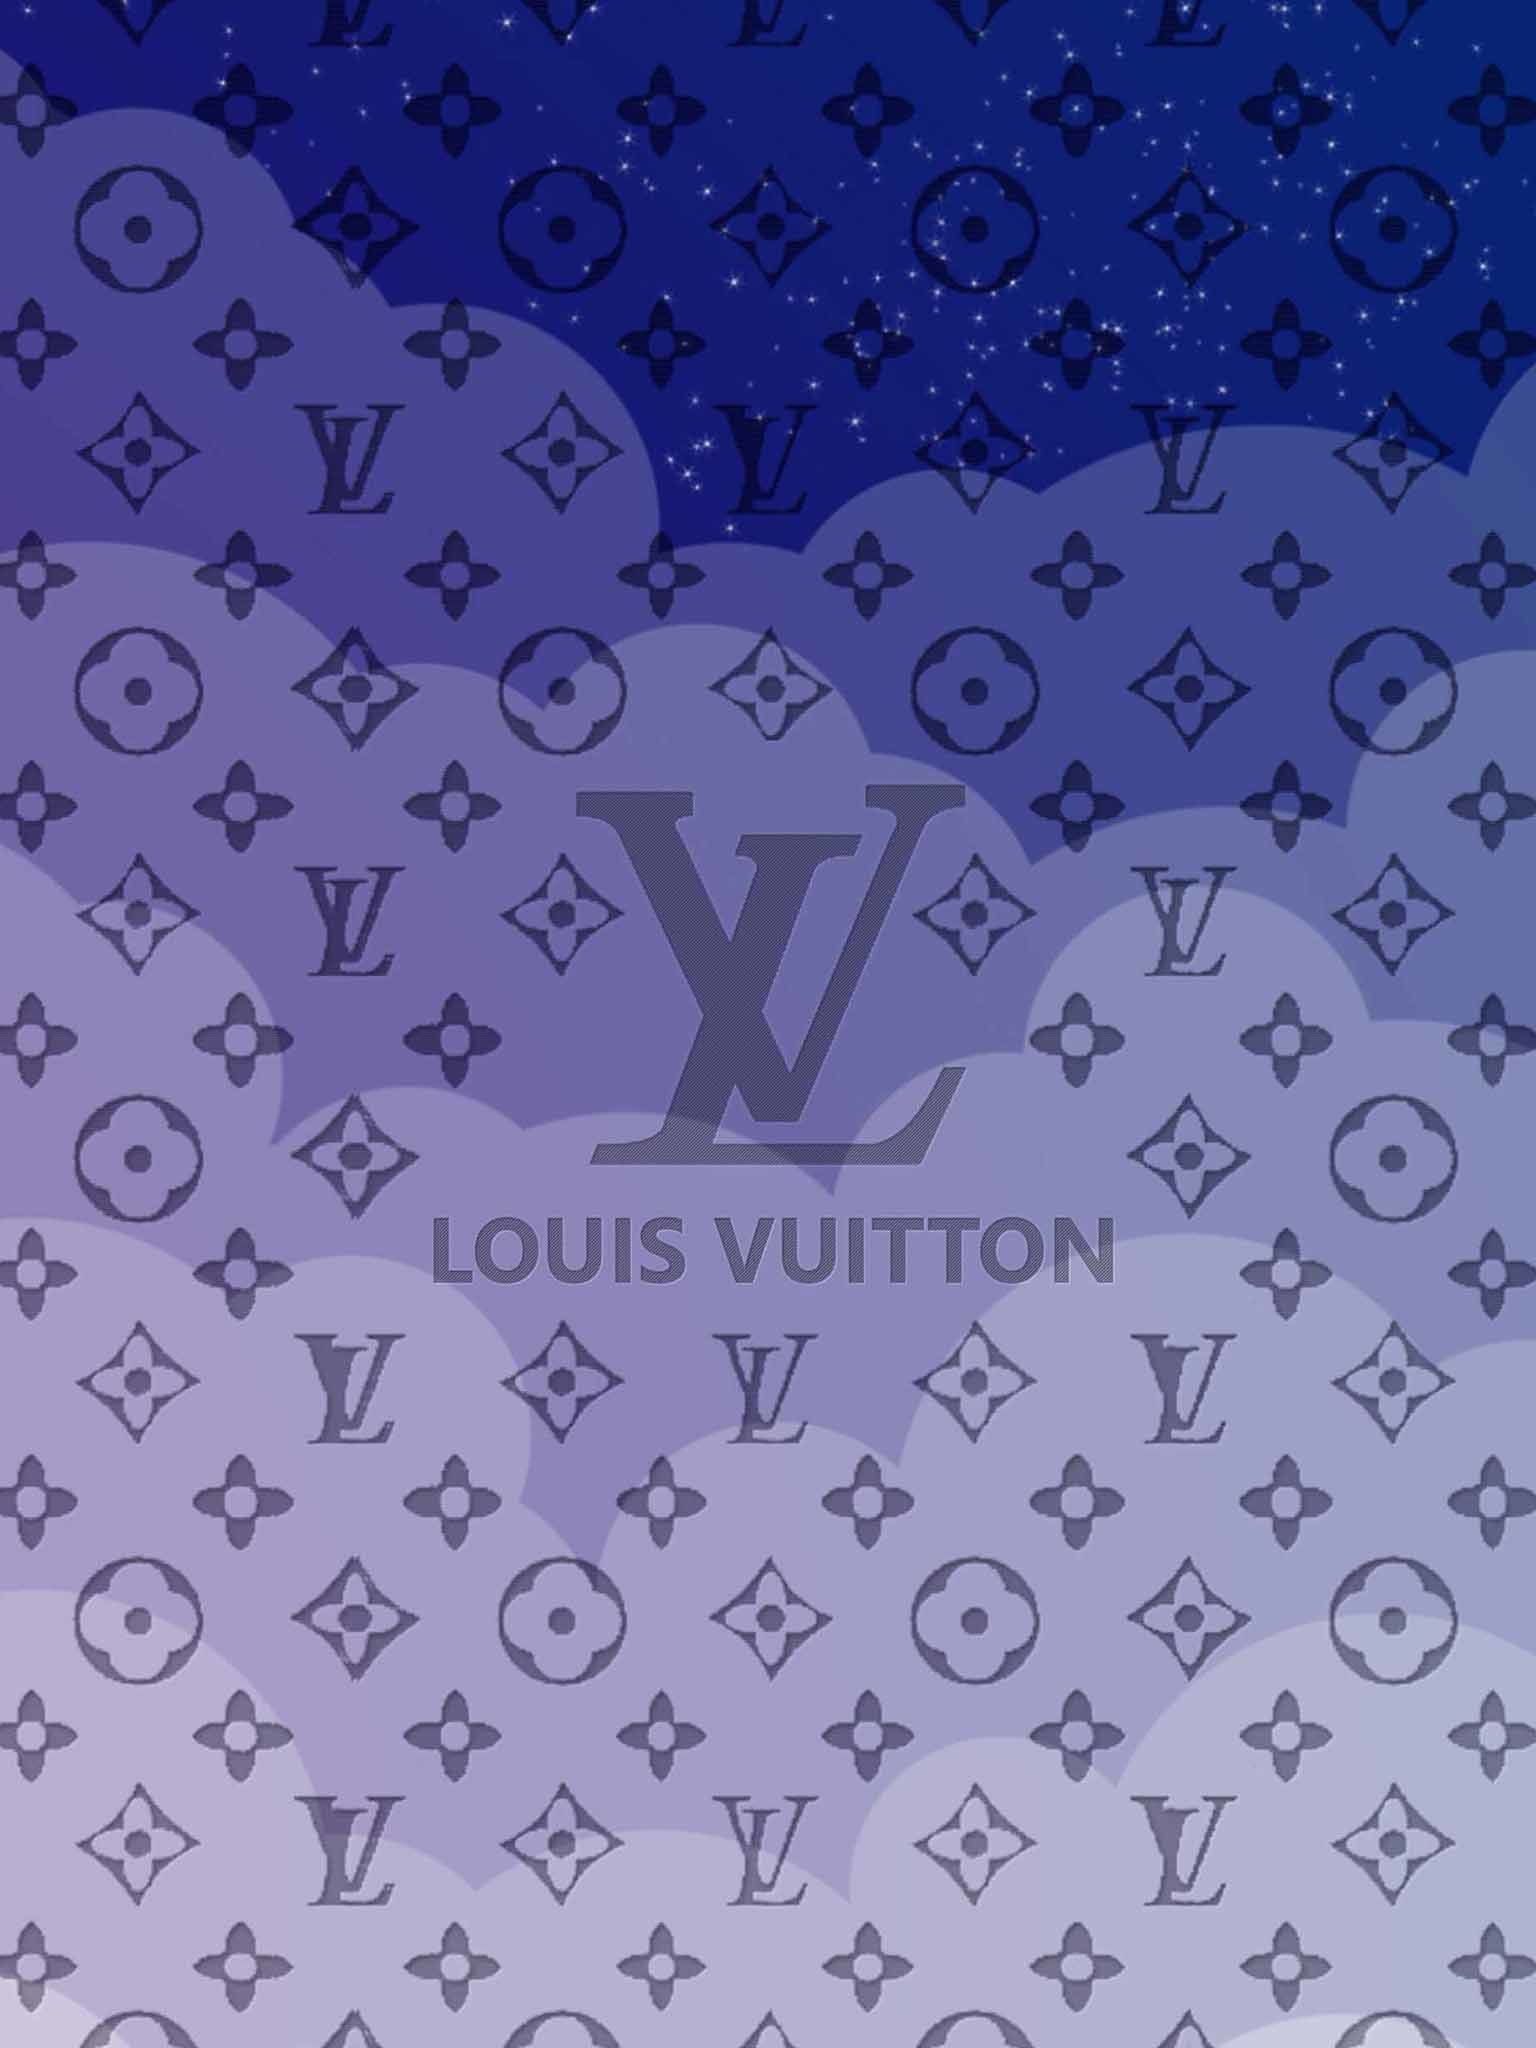 Louis vuitton iphone wallpaper, Louis vuitton, Louis vuitton background